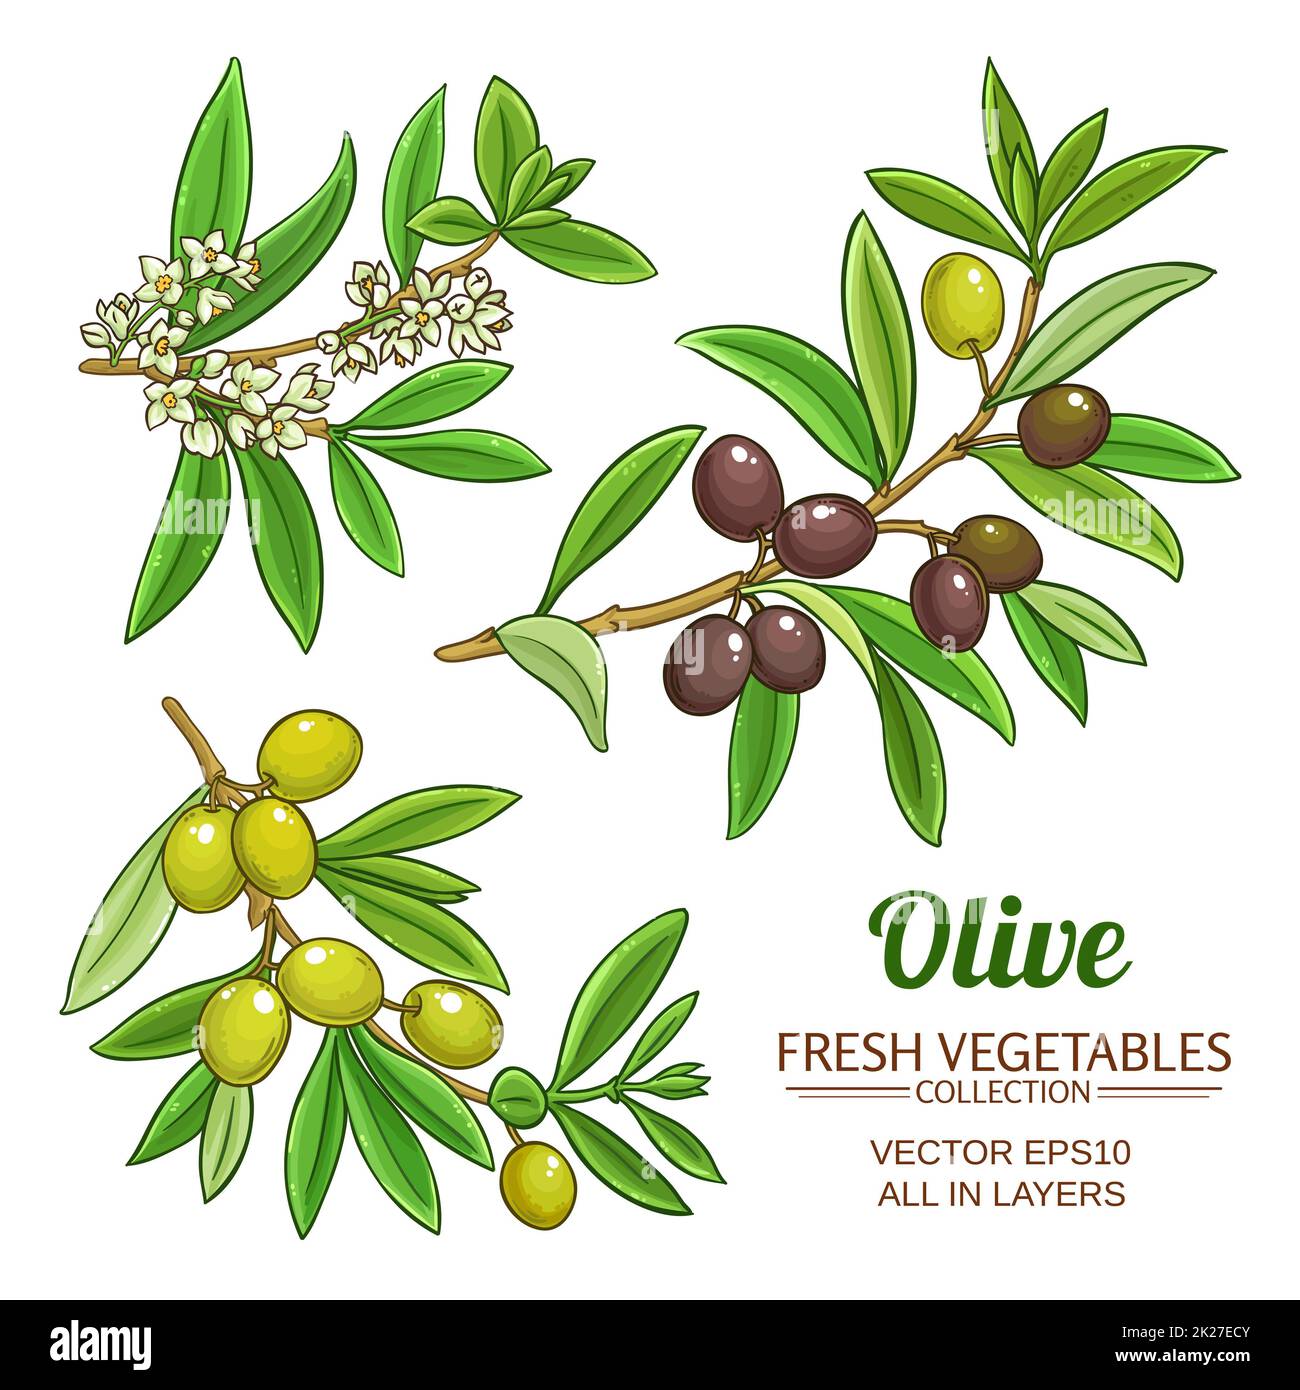 Olive Vectors & Illustrations for Free Download